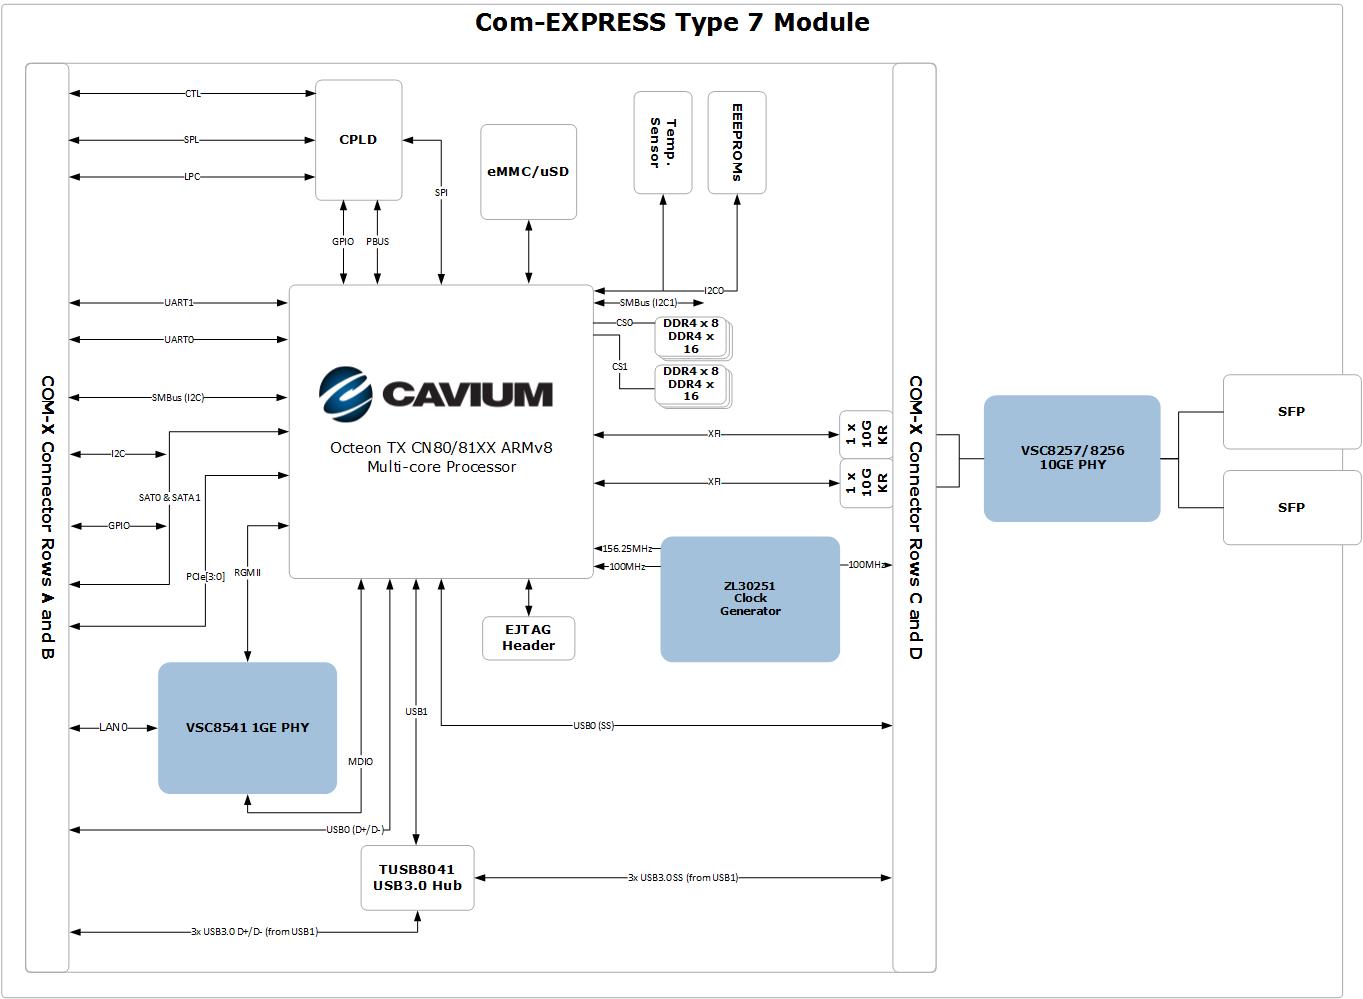 COM-Express Type 7 Module Ecosystem Reference Design - Microsemi ICs for Cavium OCTEON TX™ CN80/81XX